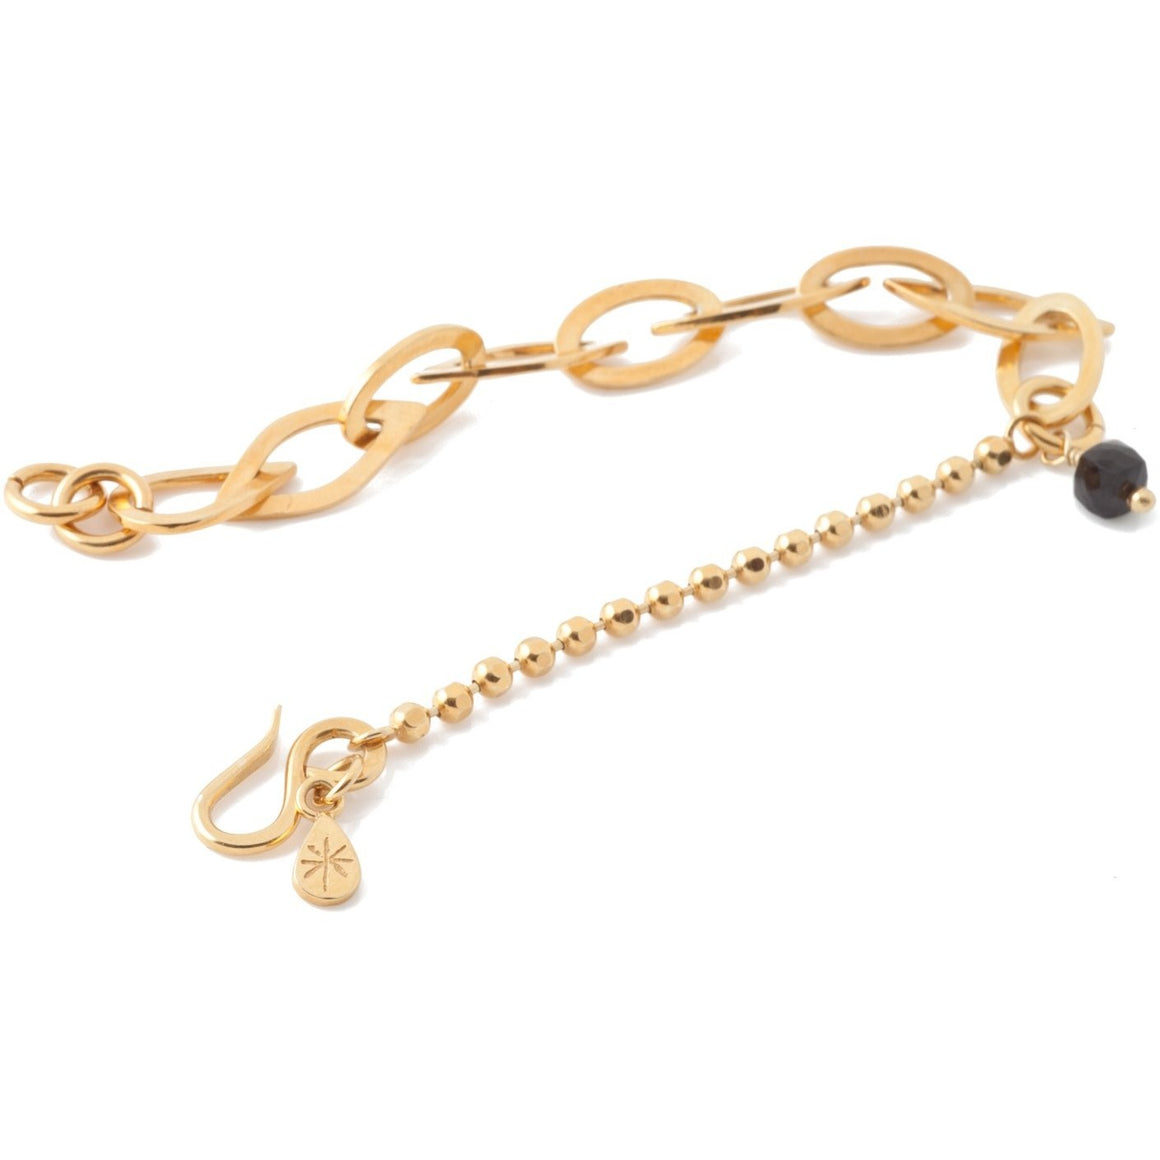 Chain Charm Bracelet in Gold